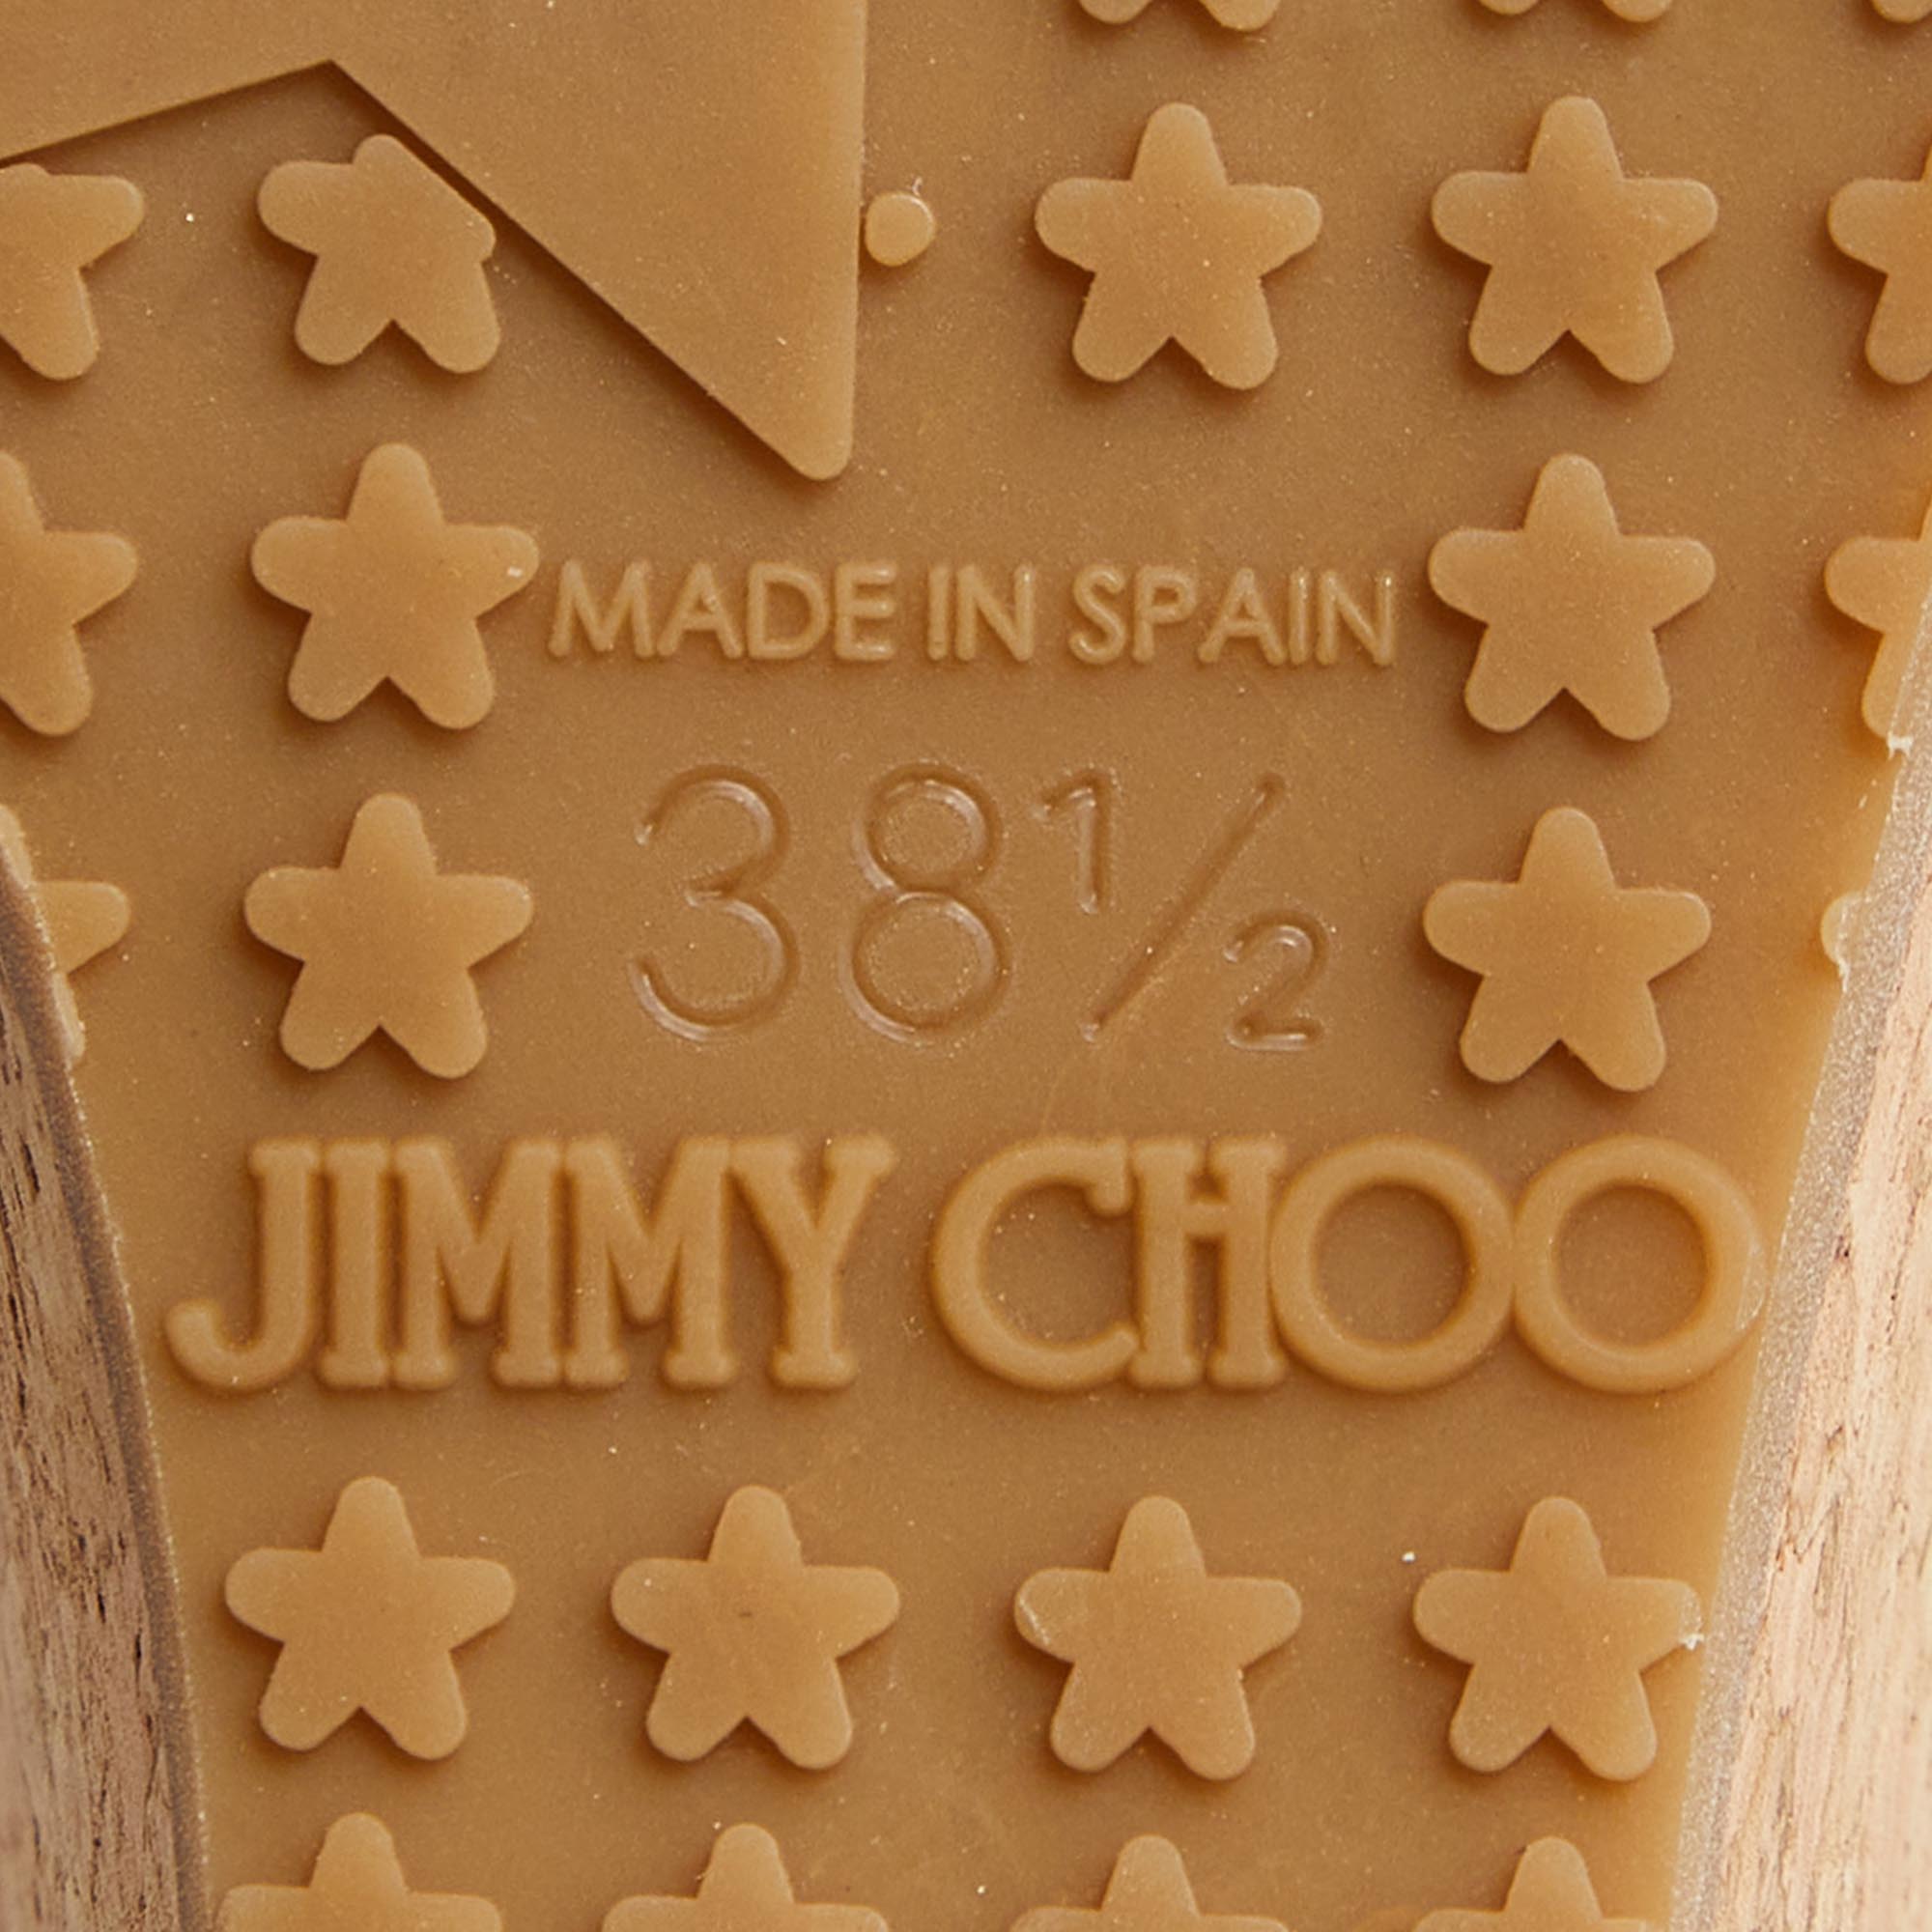 Jimmy Choo Purple Patent Leather Prima Cork Wedge Slides Size 38.5